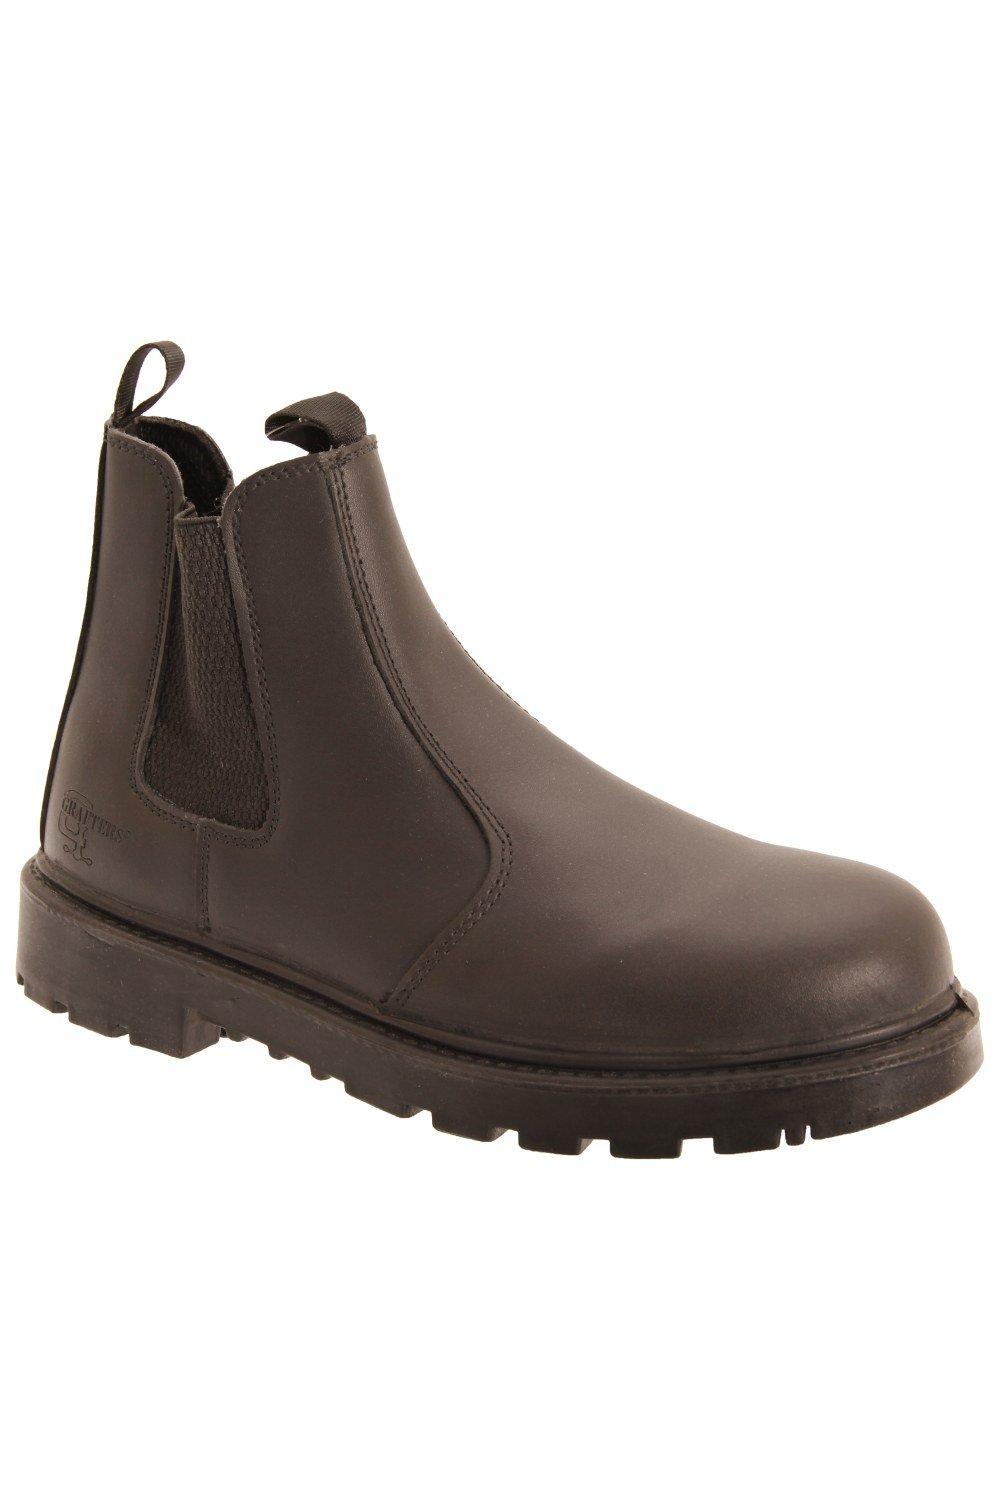 Grinder Safety Twin Gusset Leather Dealer Boots